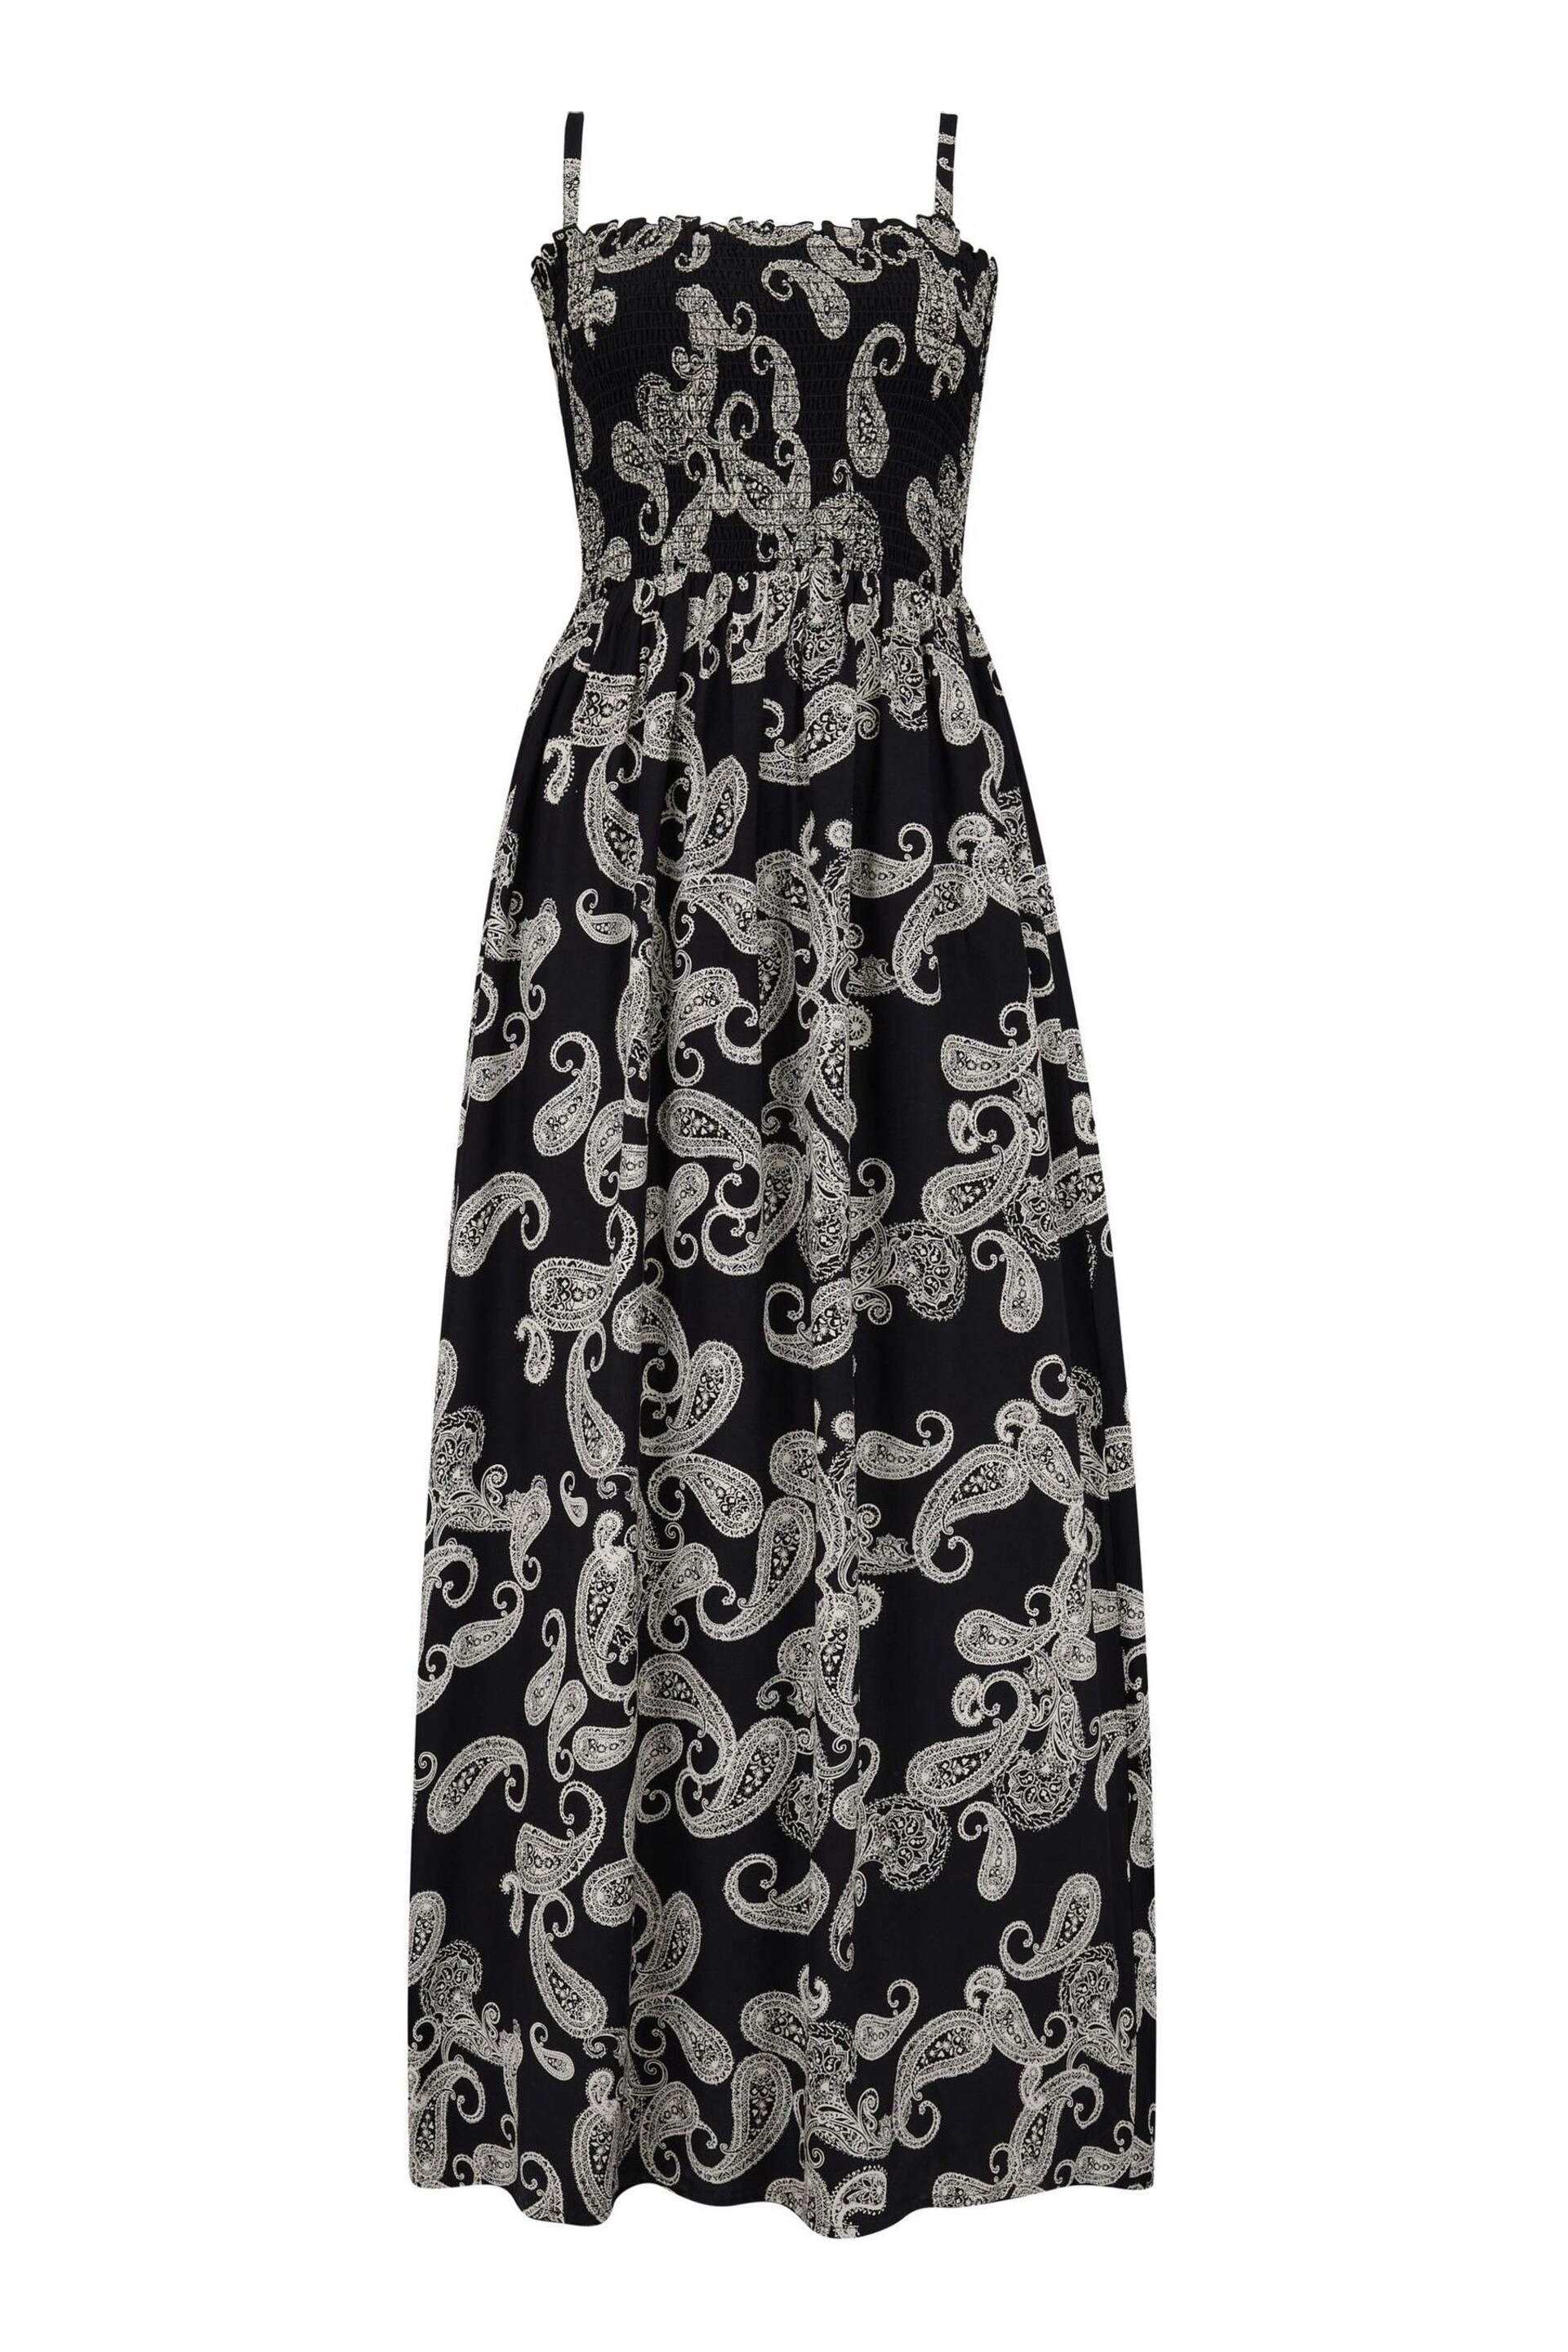 Pour Moi Black Paisley Strapless Shirred Bodice Maxi Beach Dress - Image 3 of 4